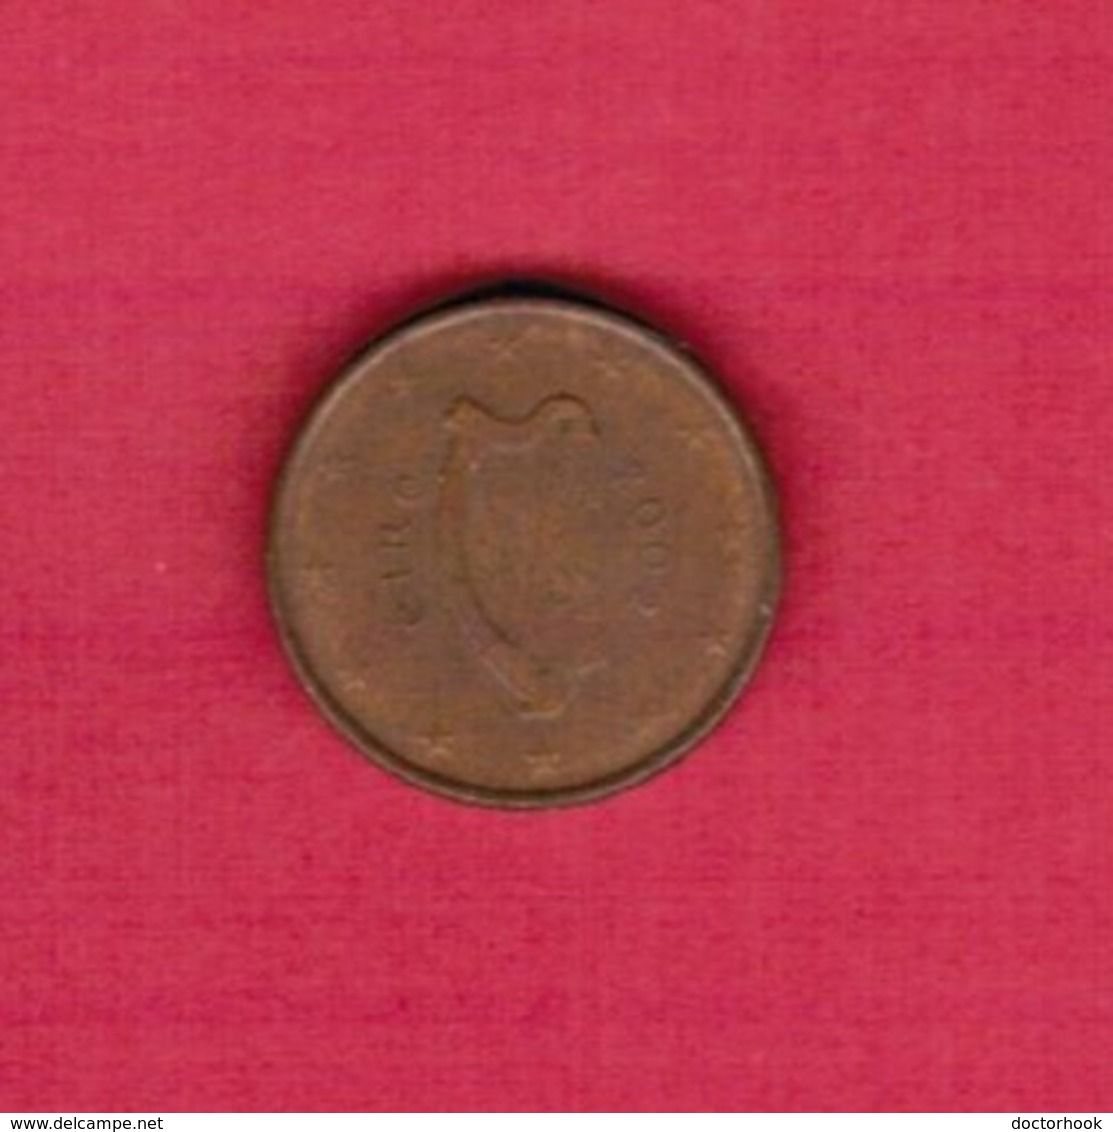 IRELAND   1 EURO CENT 2002 (KM # 32) #5225 - Ireland